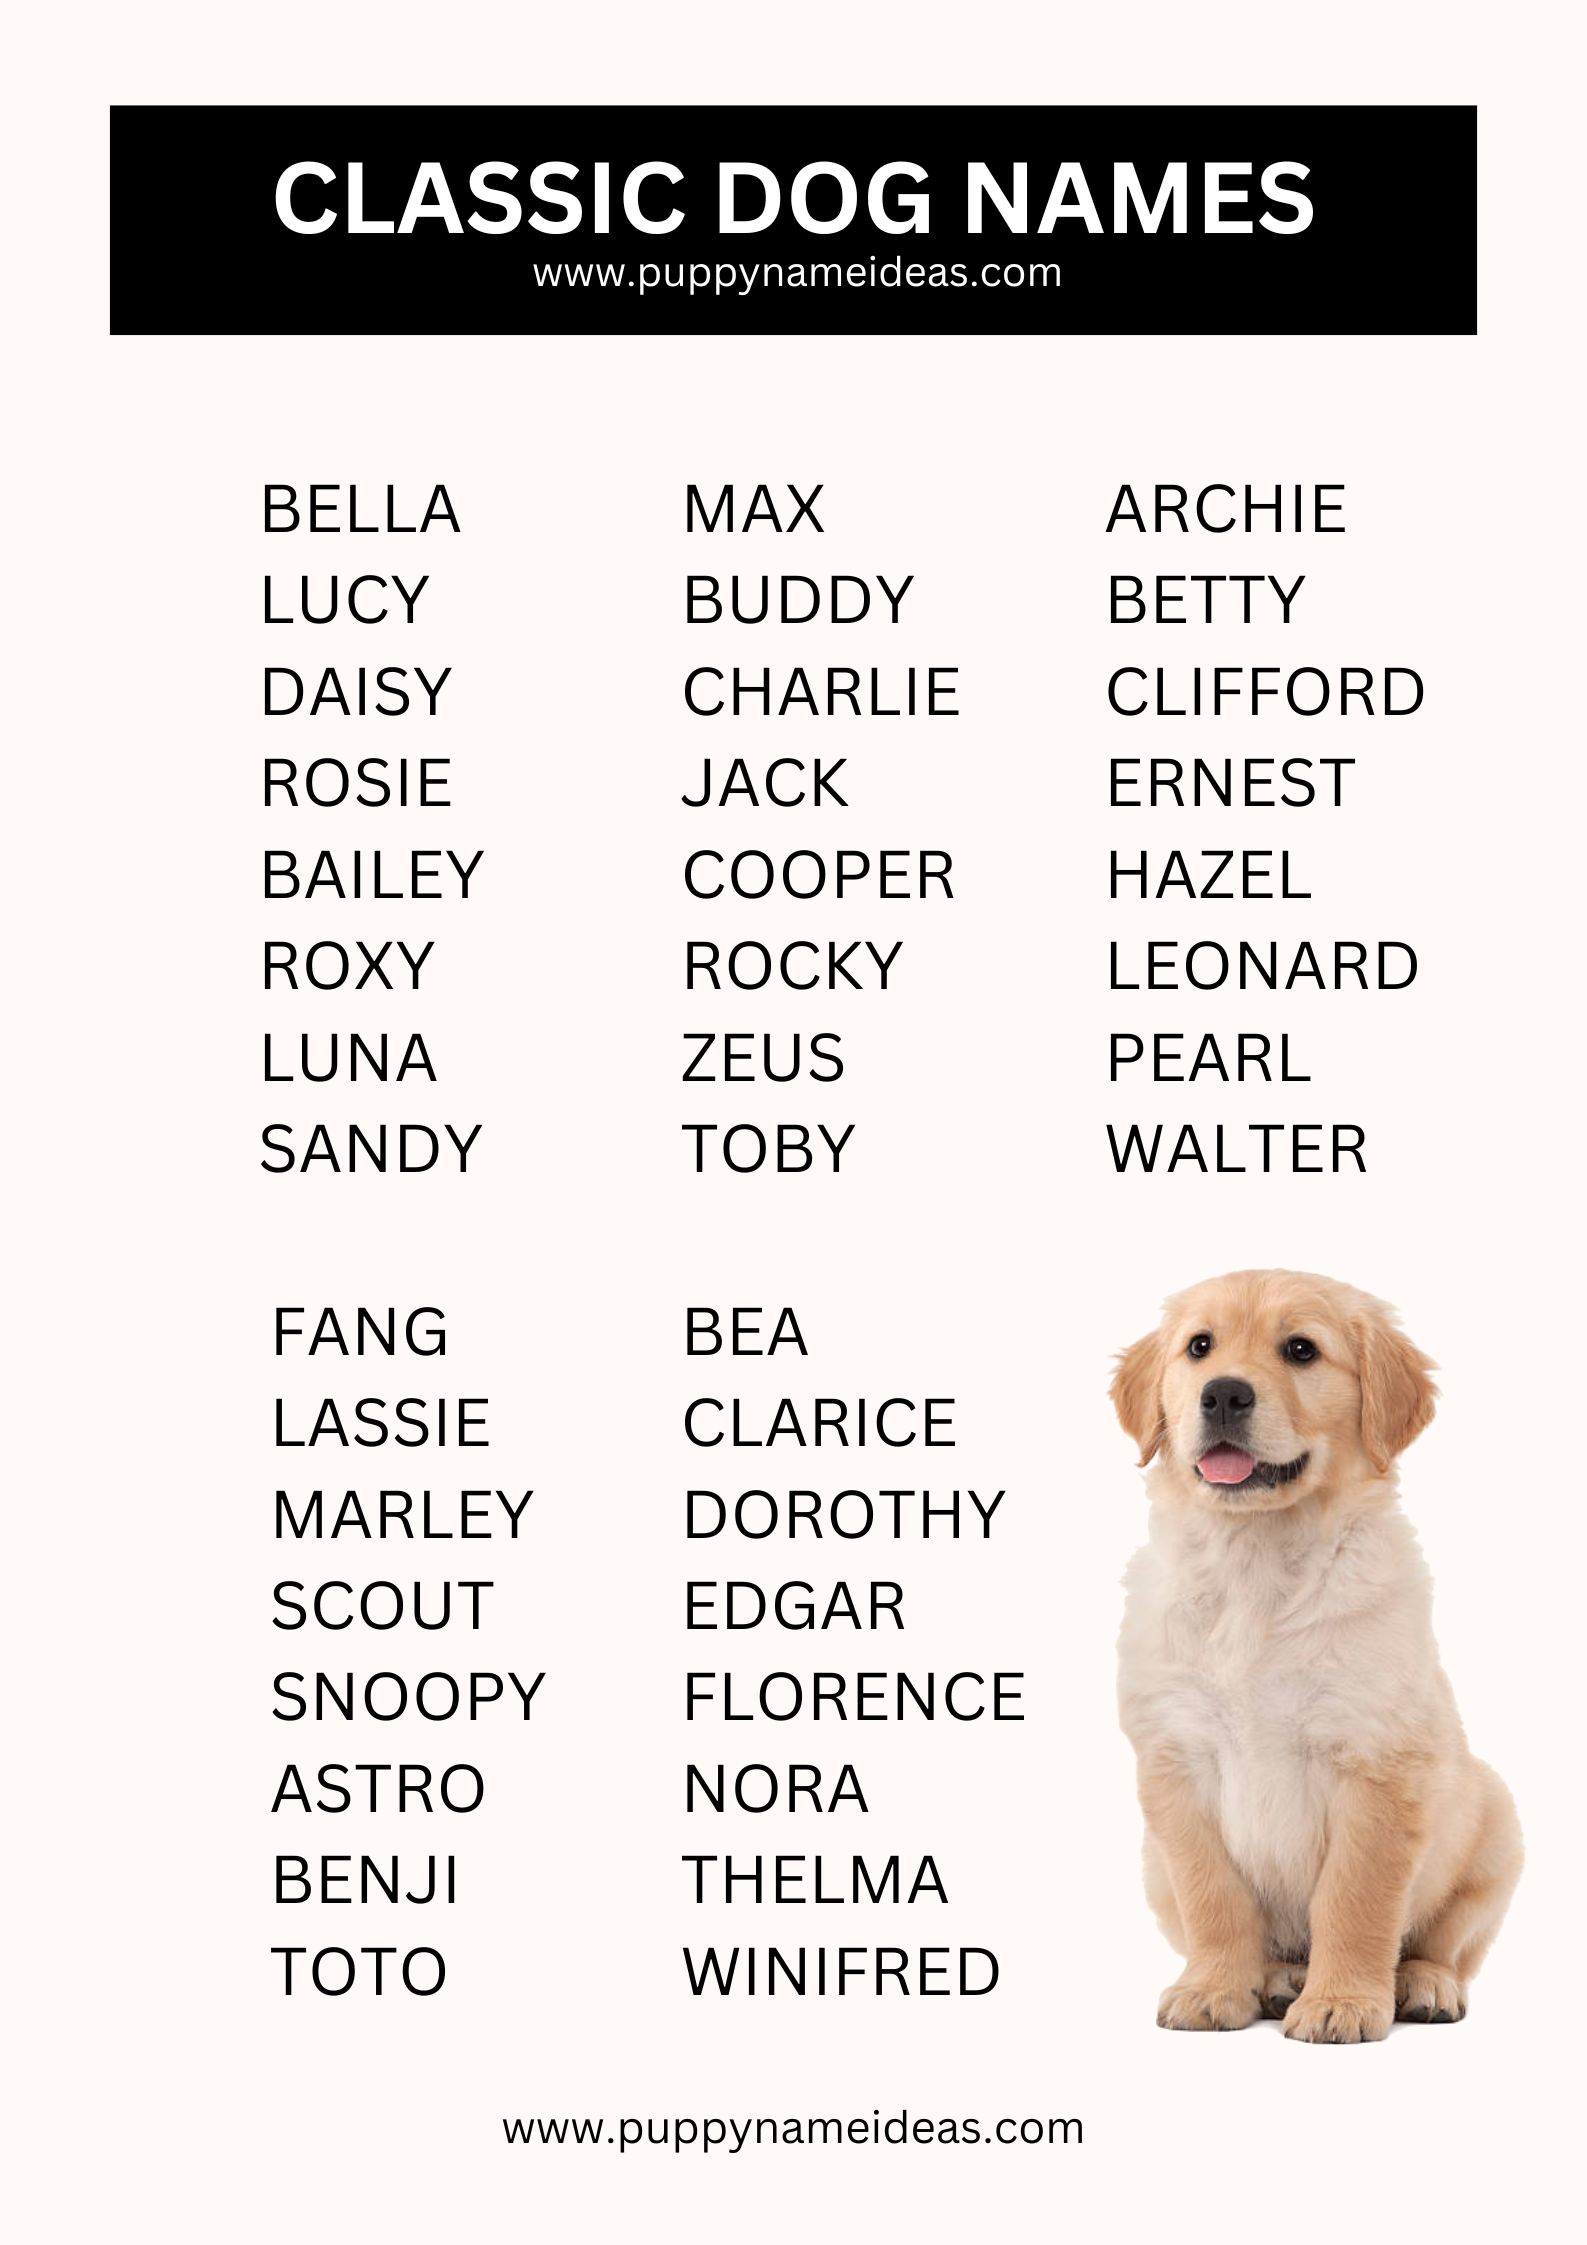 List Of Classic Dog Names